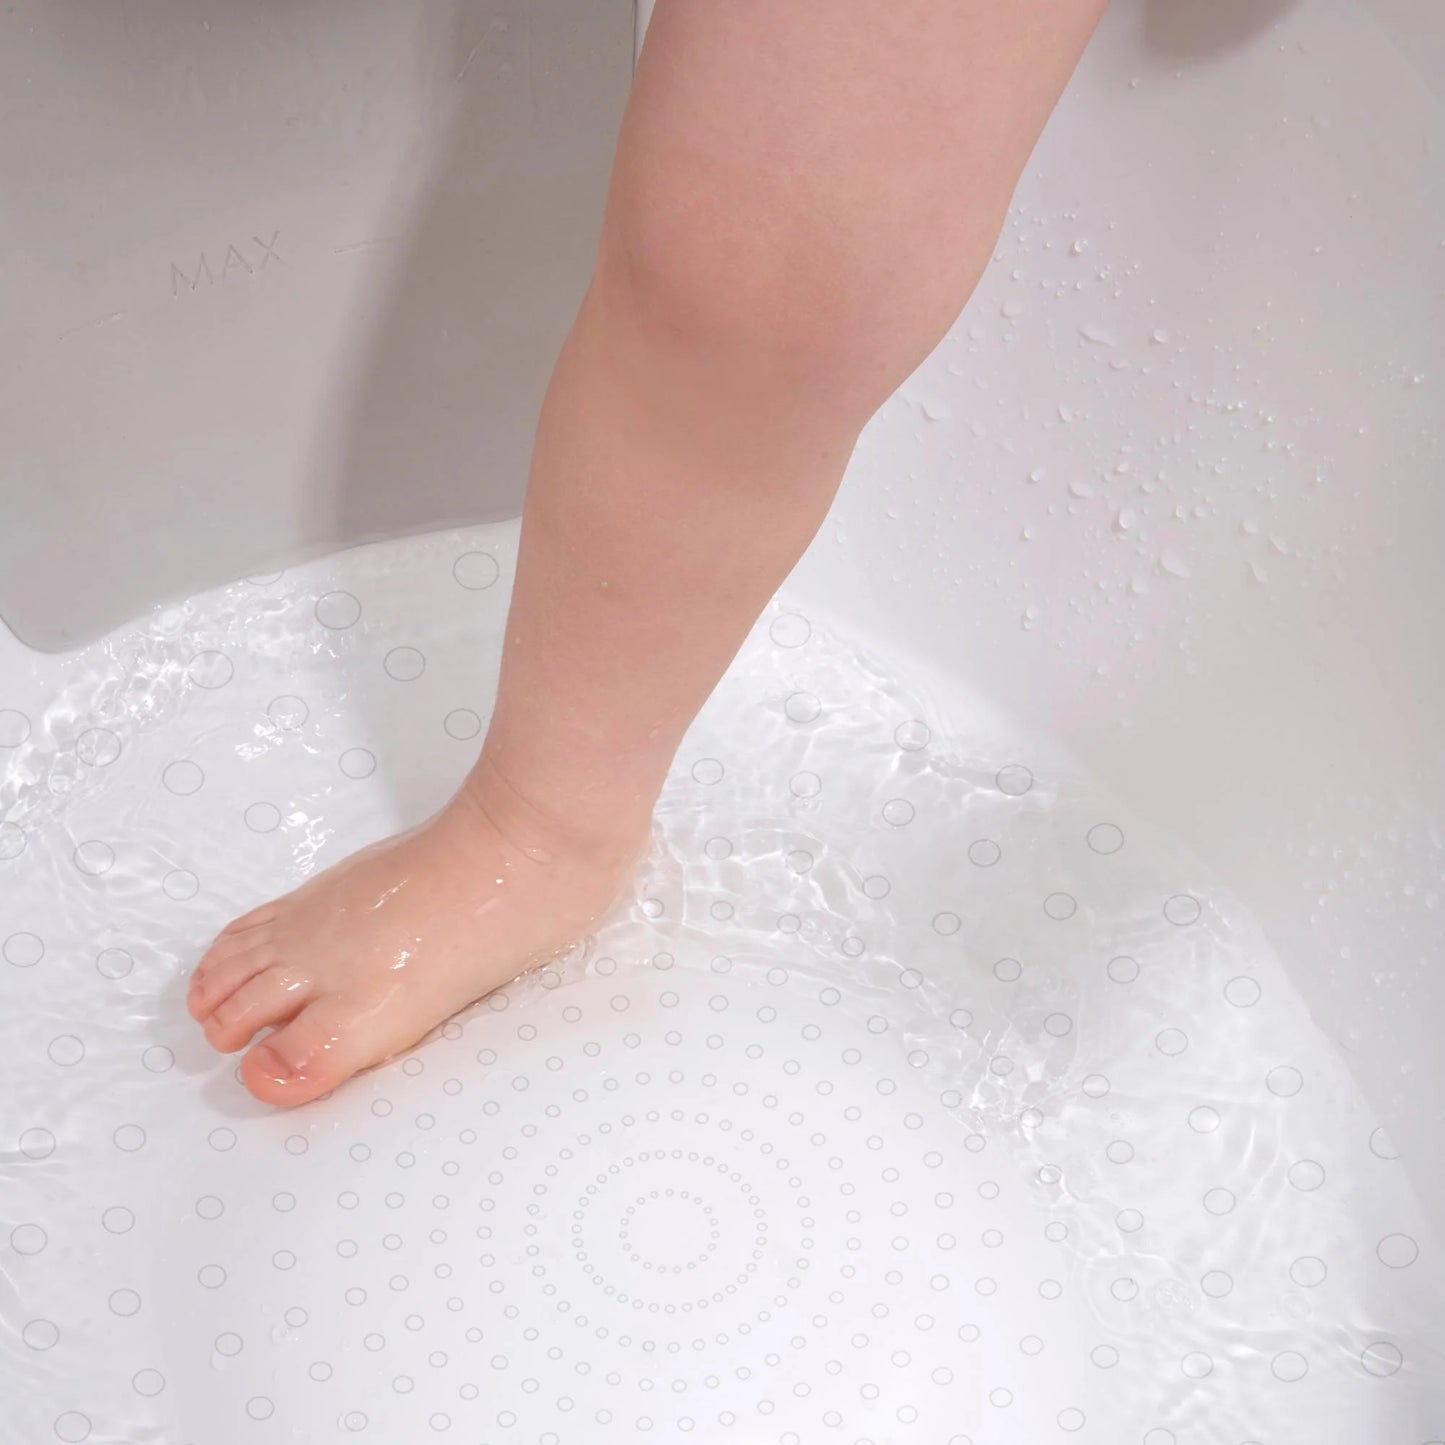 Shnuggle | Toddler Bath | Taupe